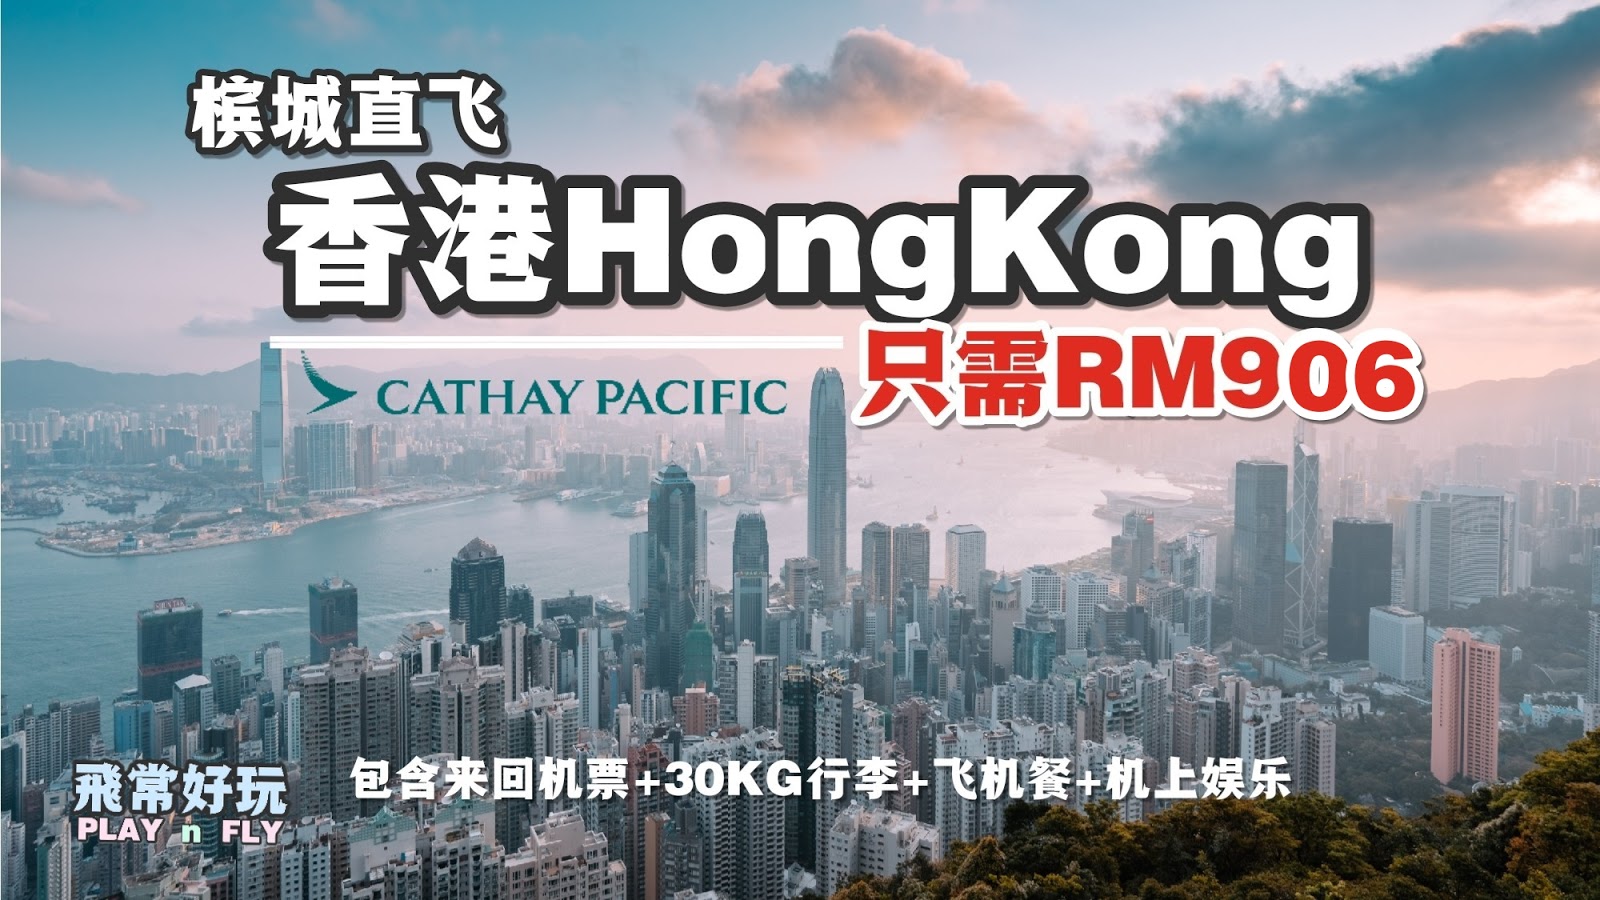 【旅游资讯】CATHAY PACIFIC2人同行直飞香港RM906!!